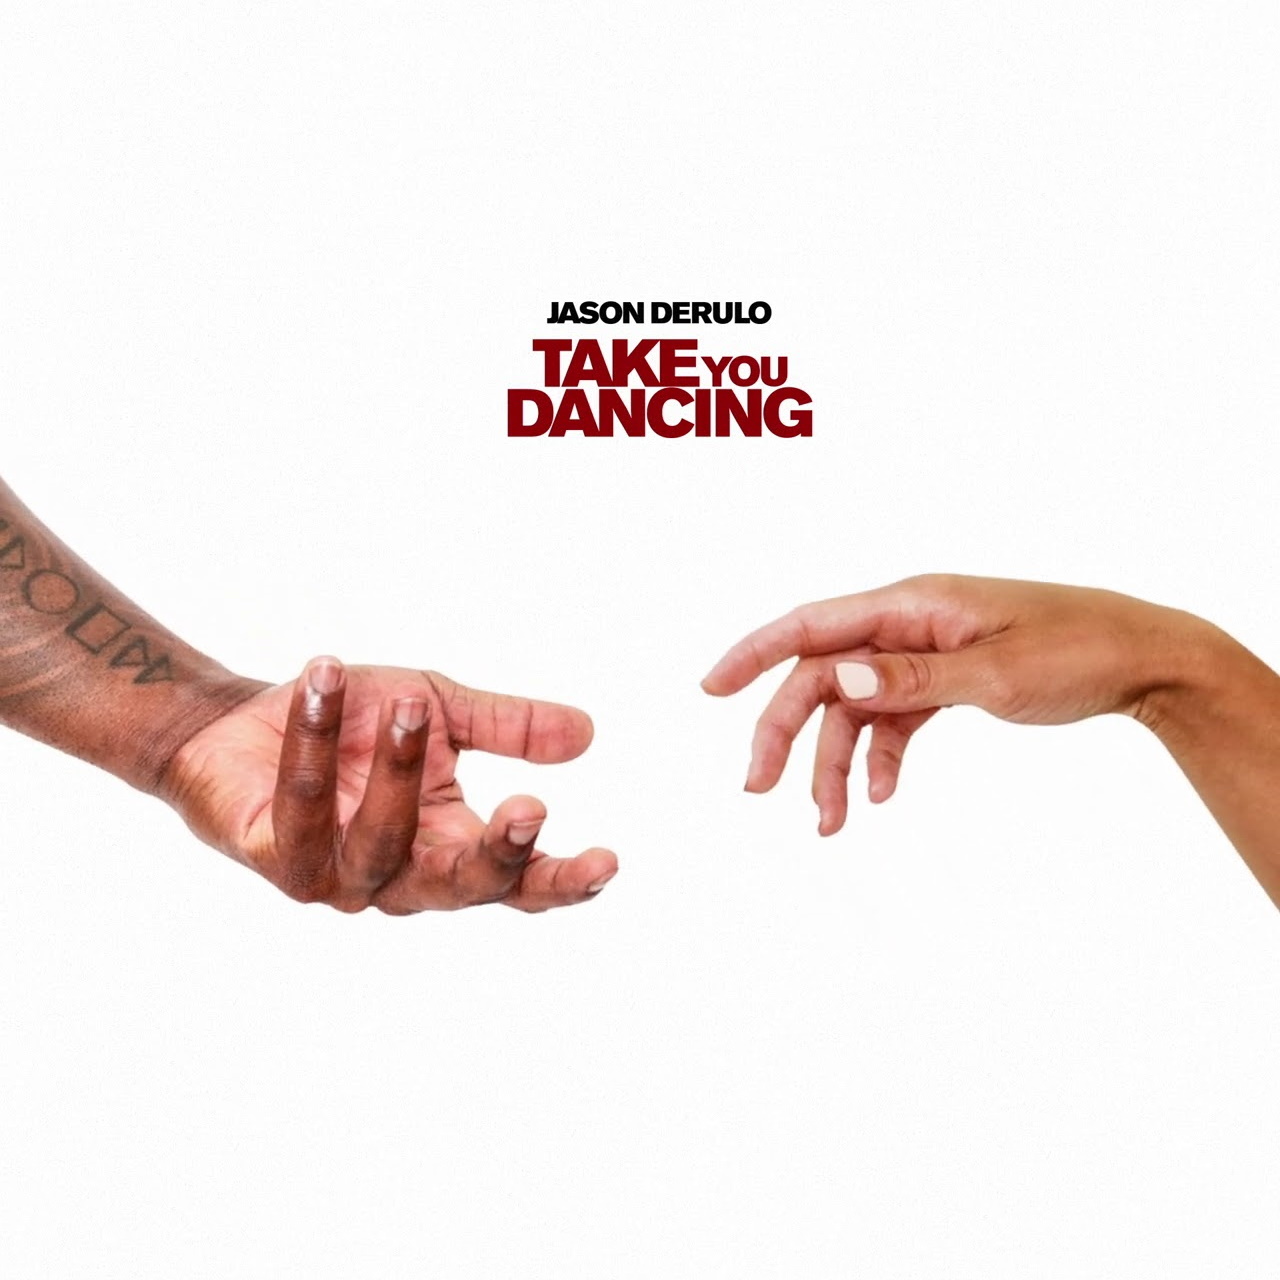 Dance of dancing remix. Jason Derulo take you Dancing. Джейсон деруло take you. Деруло Джейсон Dancing. Take you Dancing r3hab Remix Jason Derulo.